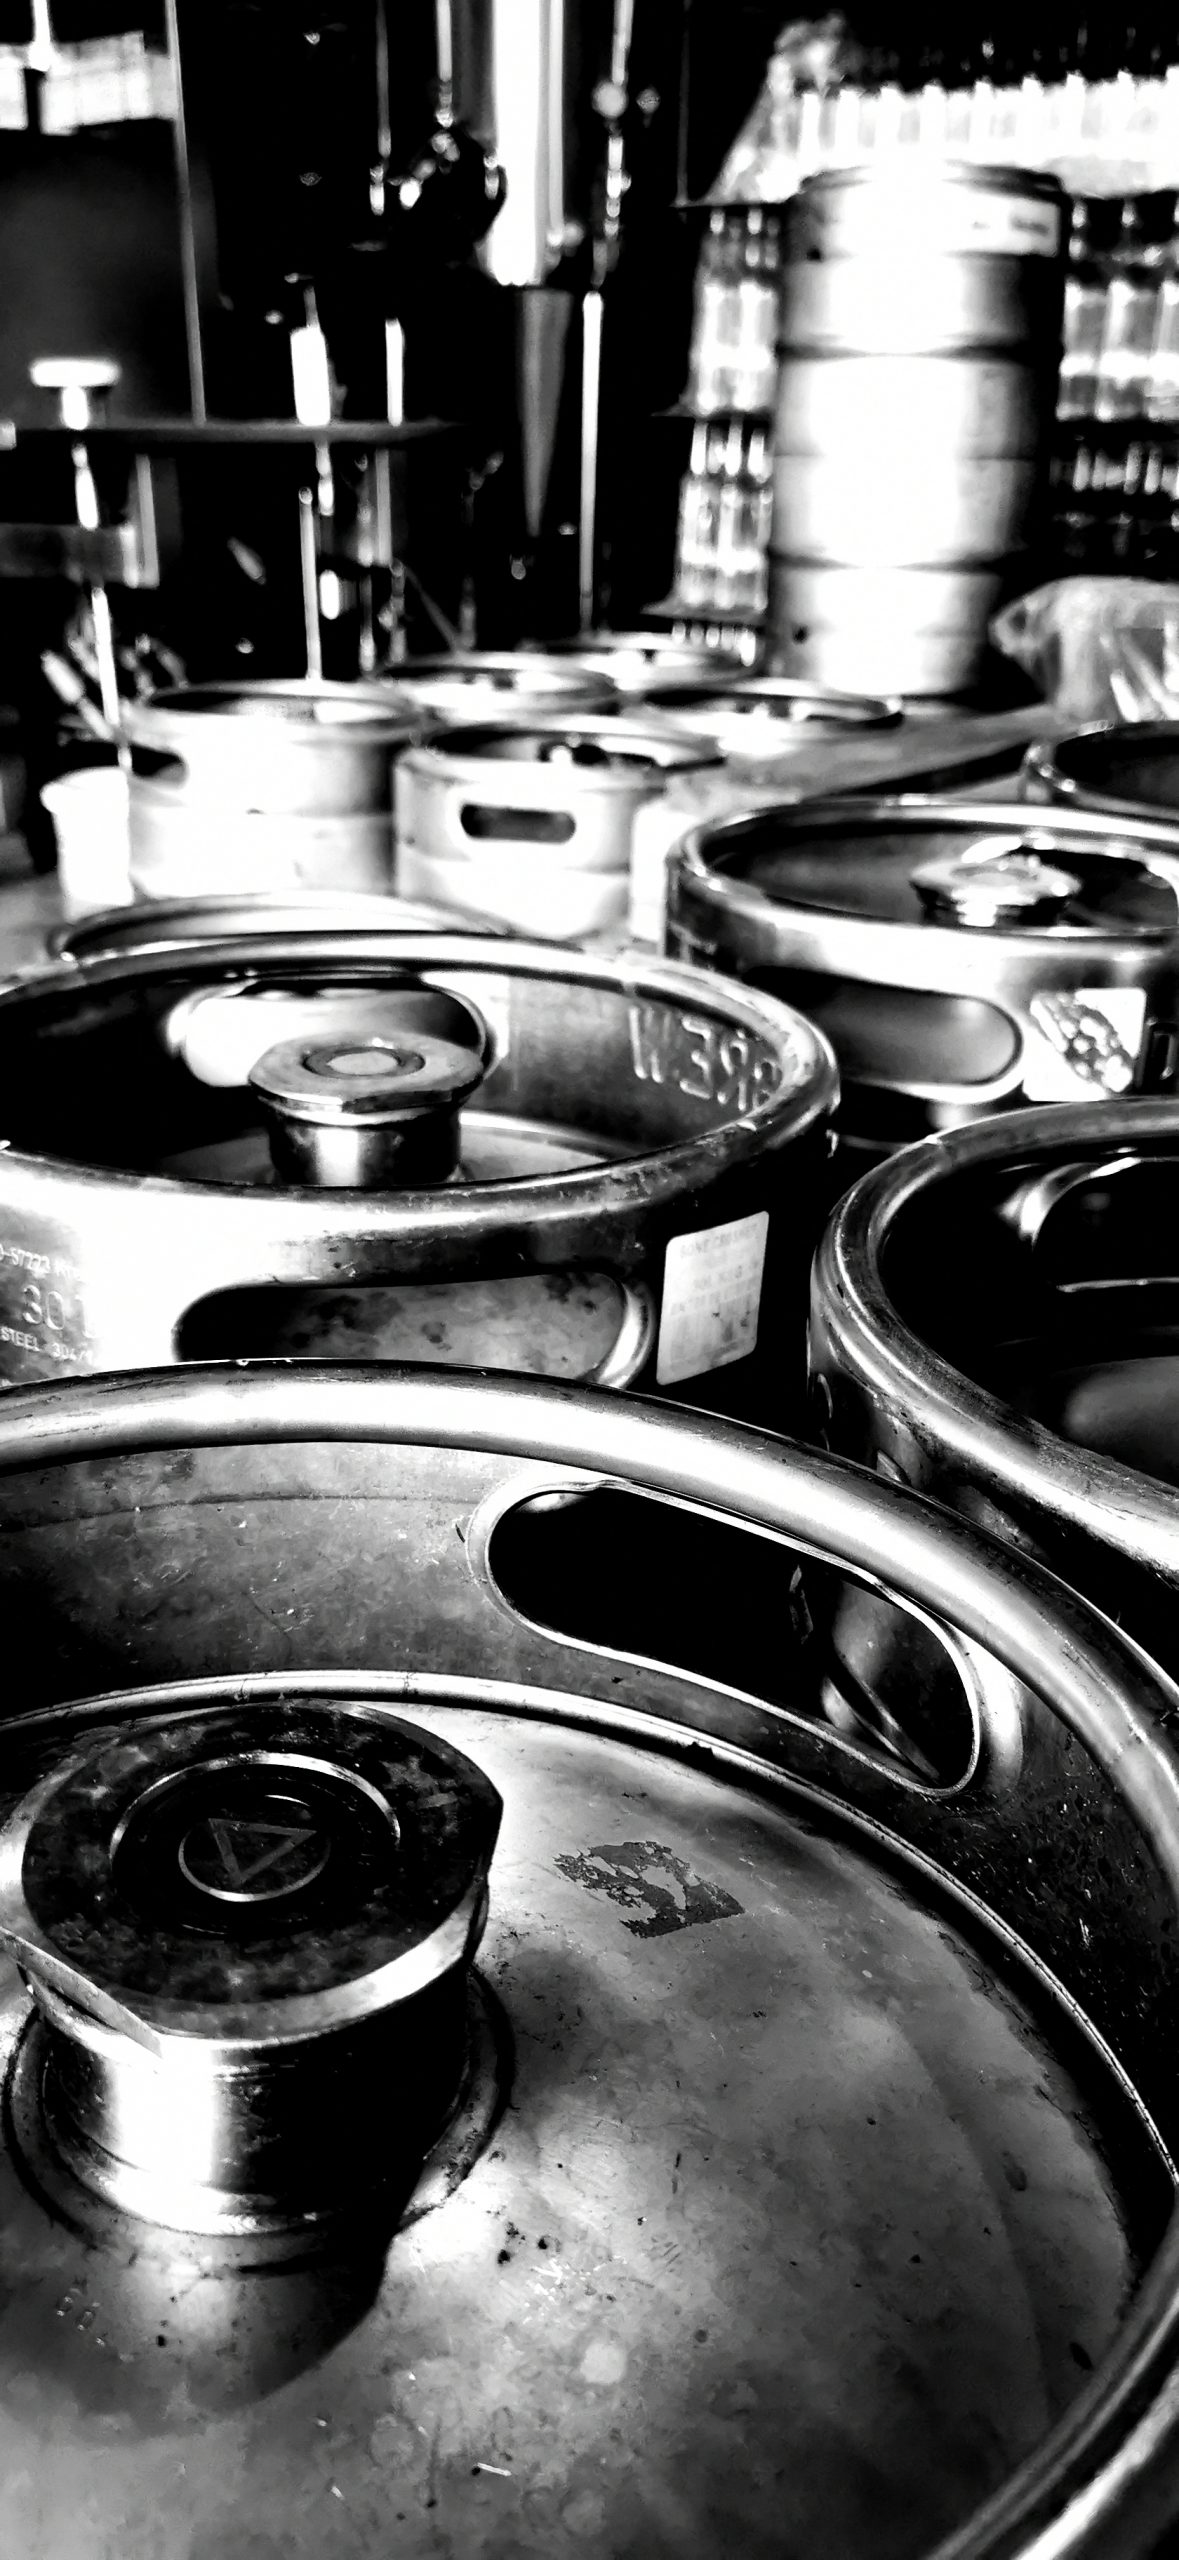 Beer On Tap Draft beer keg dispenser